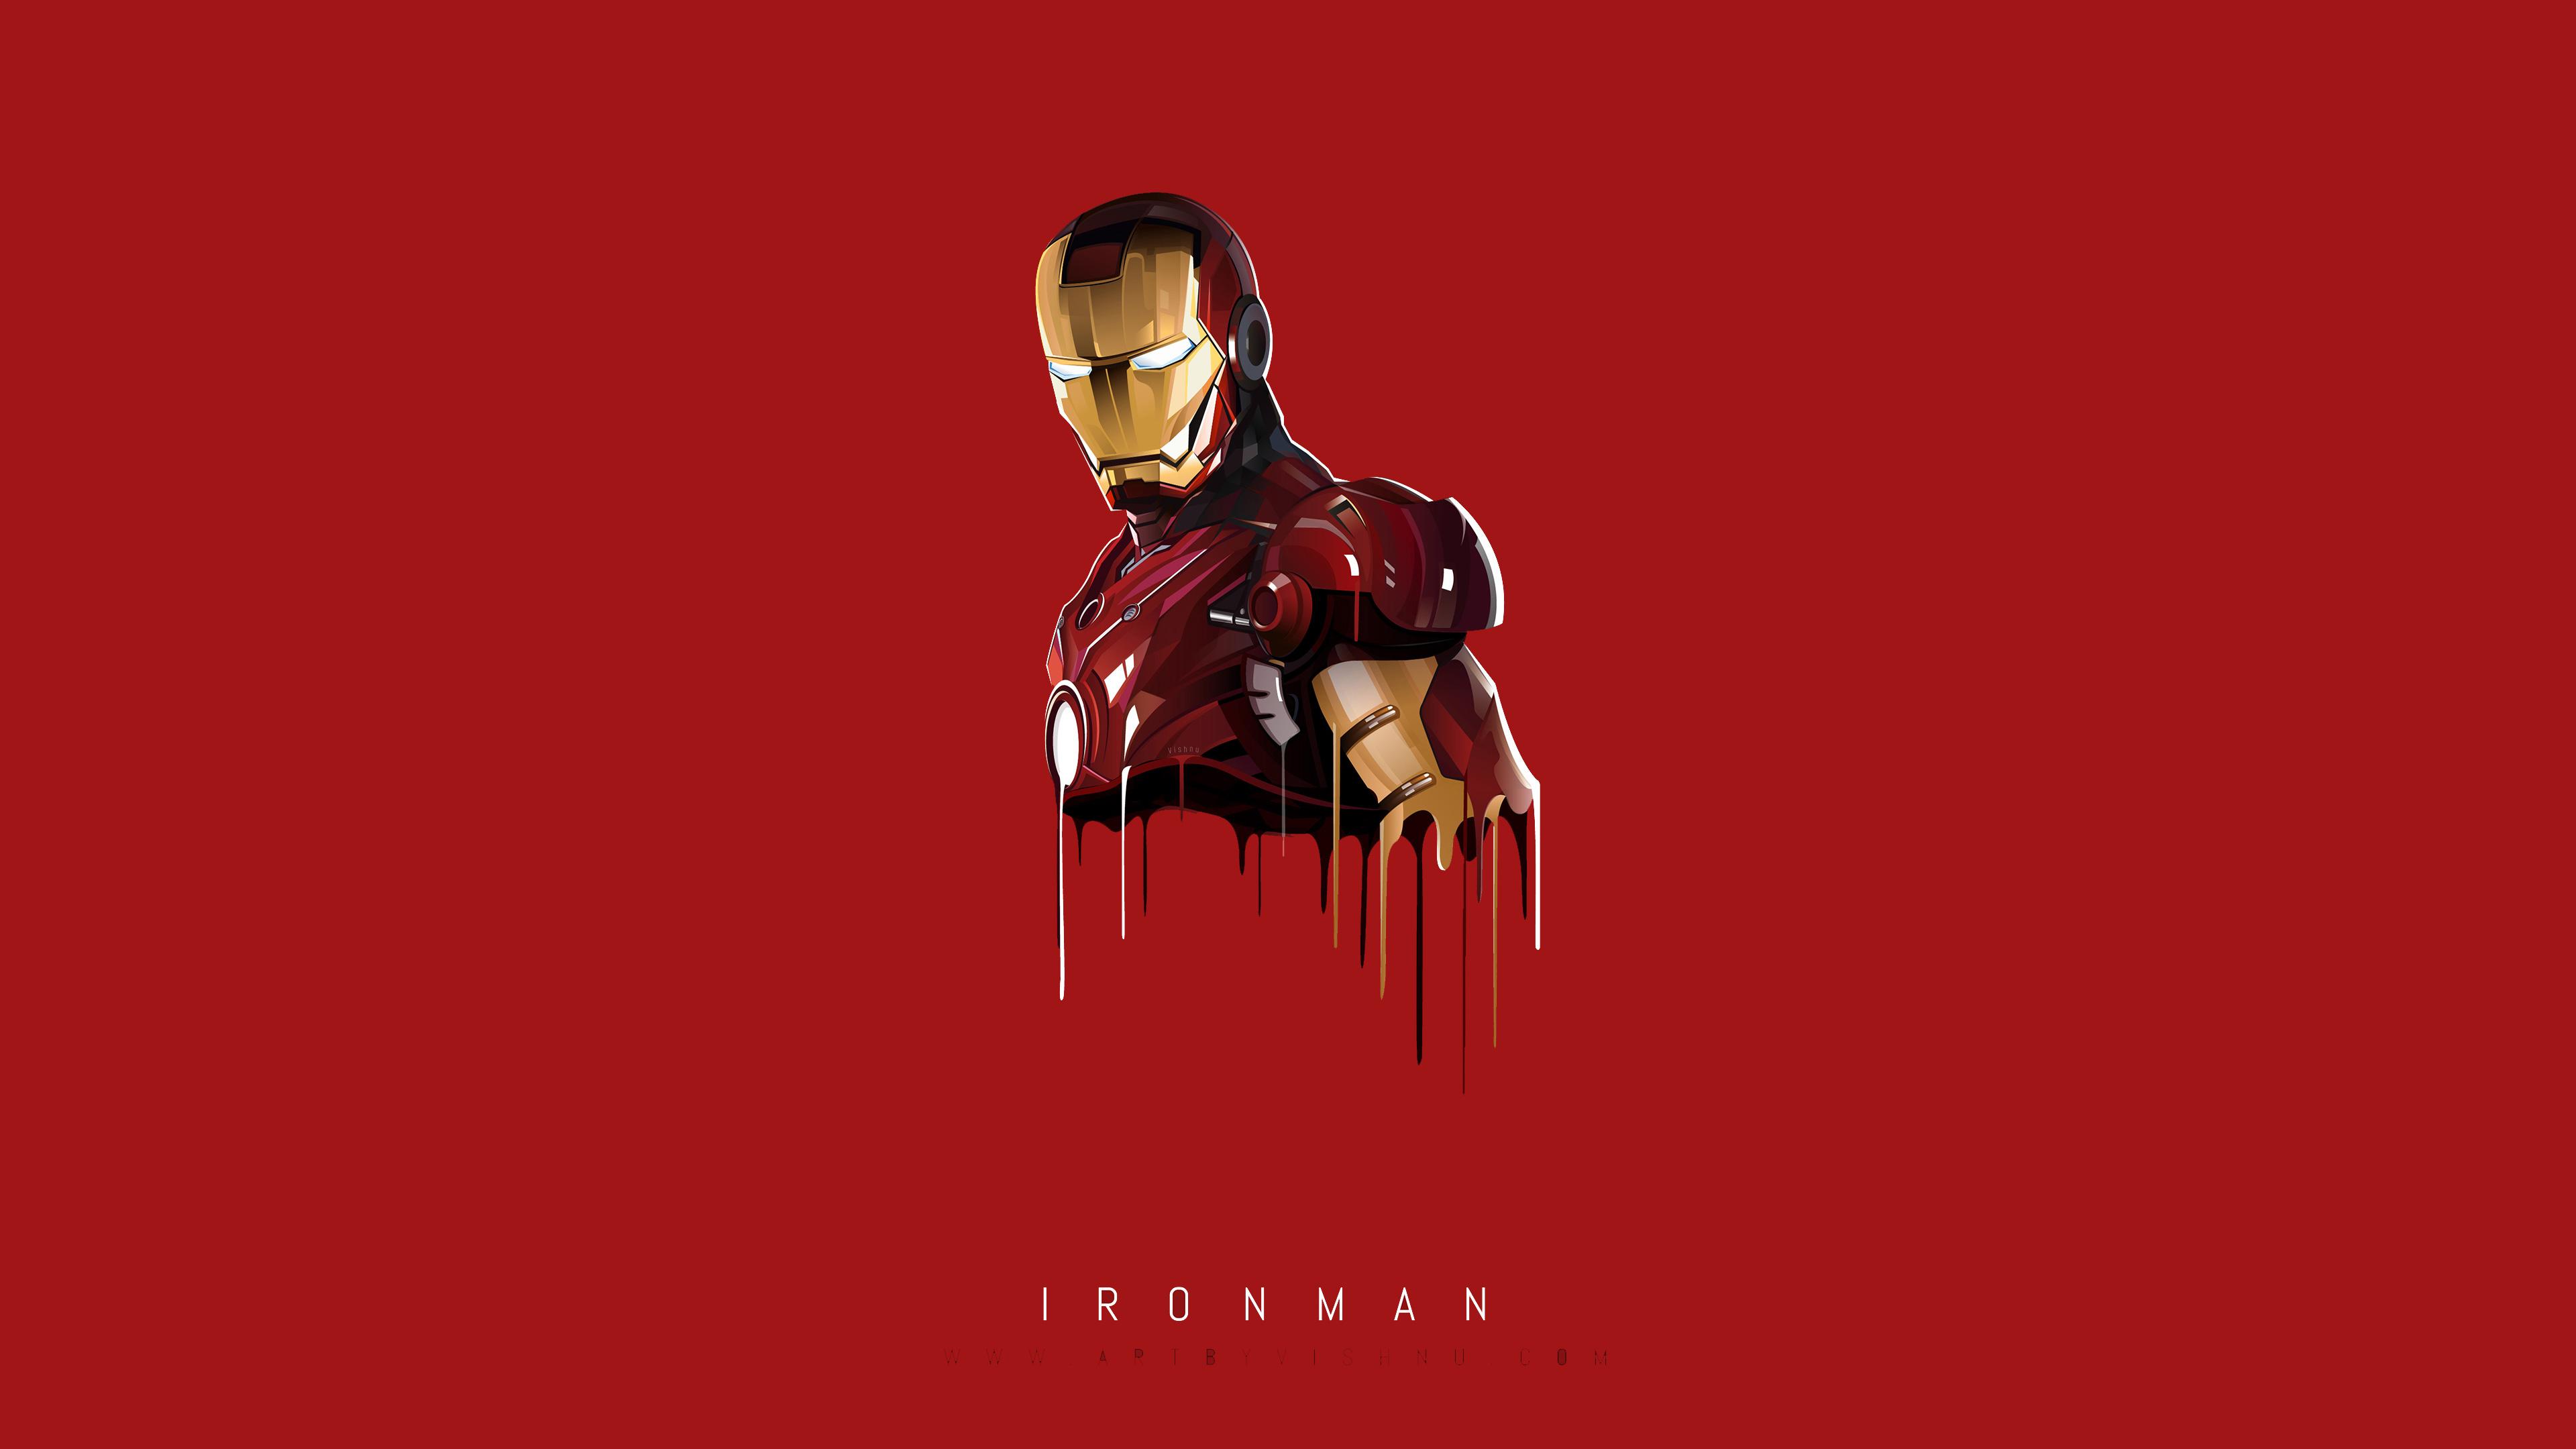 Iron Man Minimal, HD Superheroes, 4k Wallpaper, Image